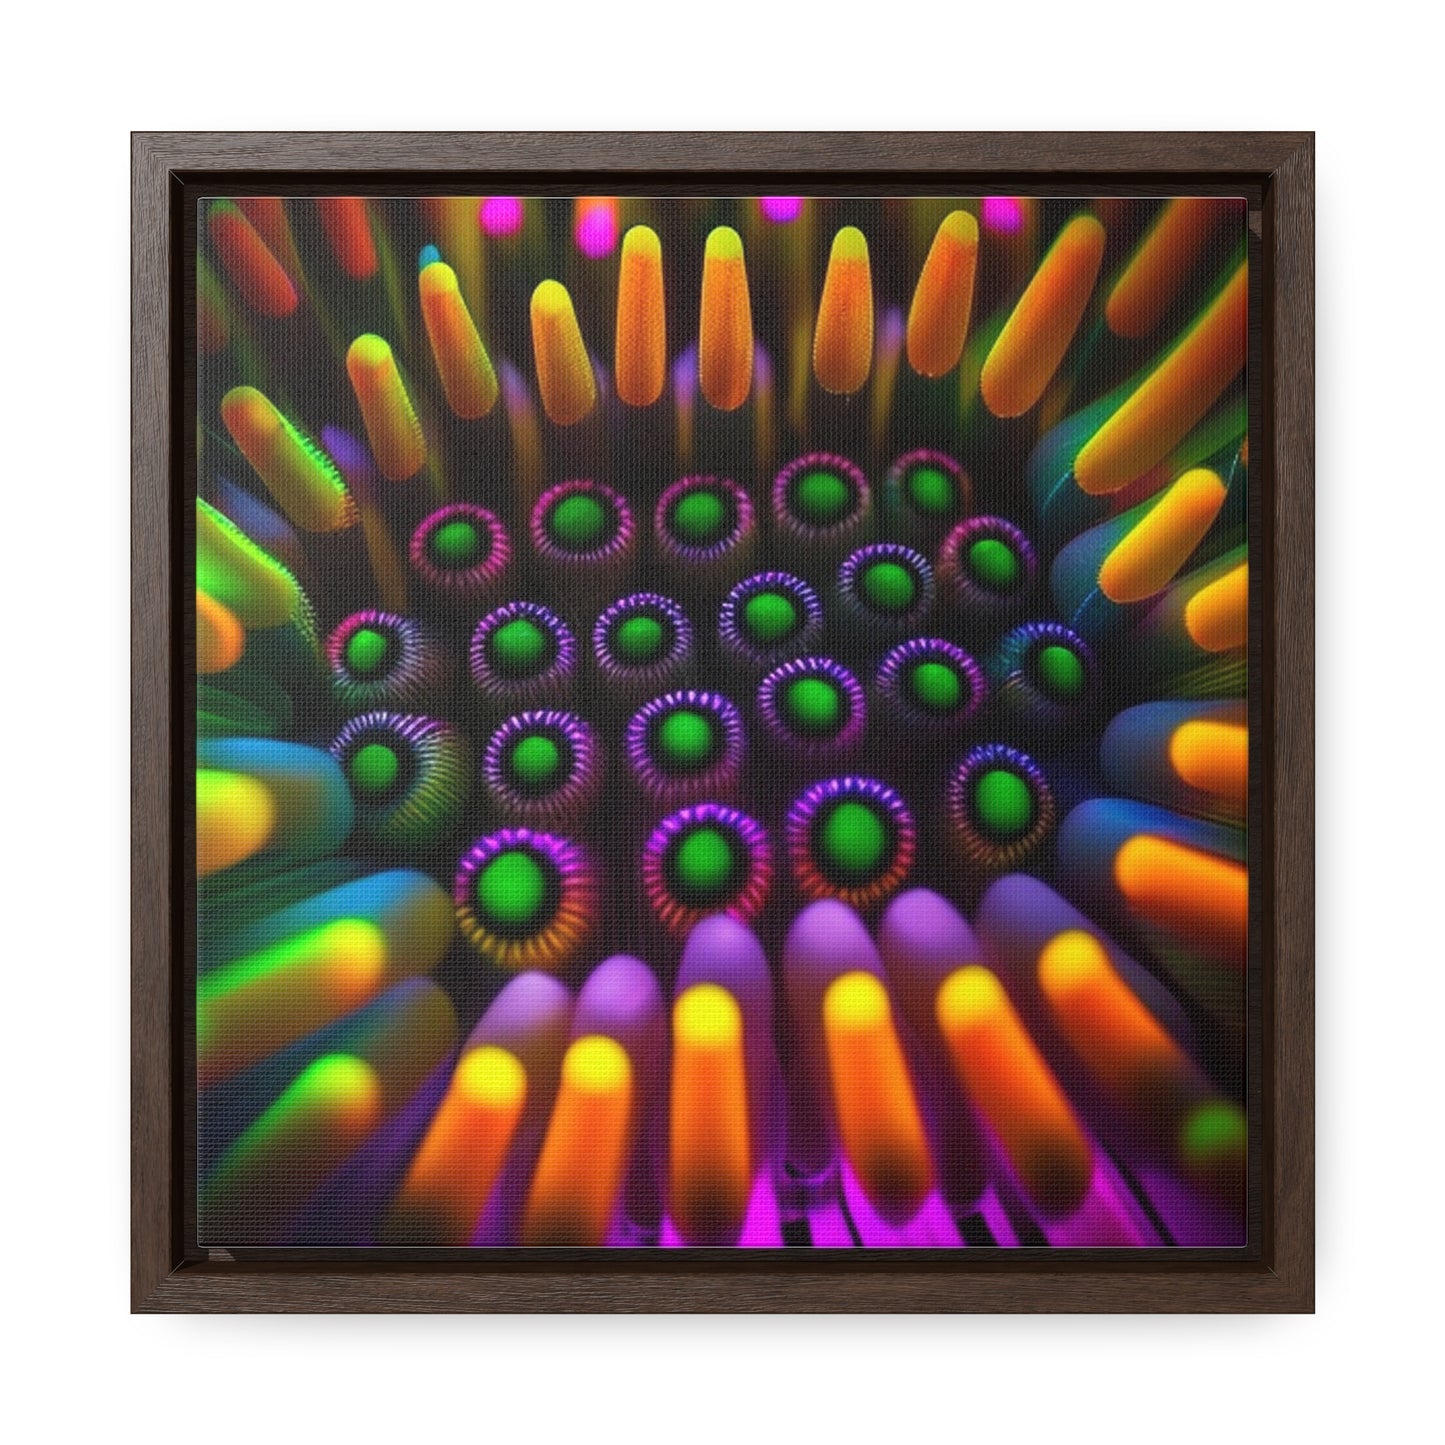 Gallery Canvas Wraps, Square Frame Macro Cactus neon square 4